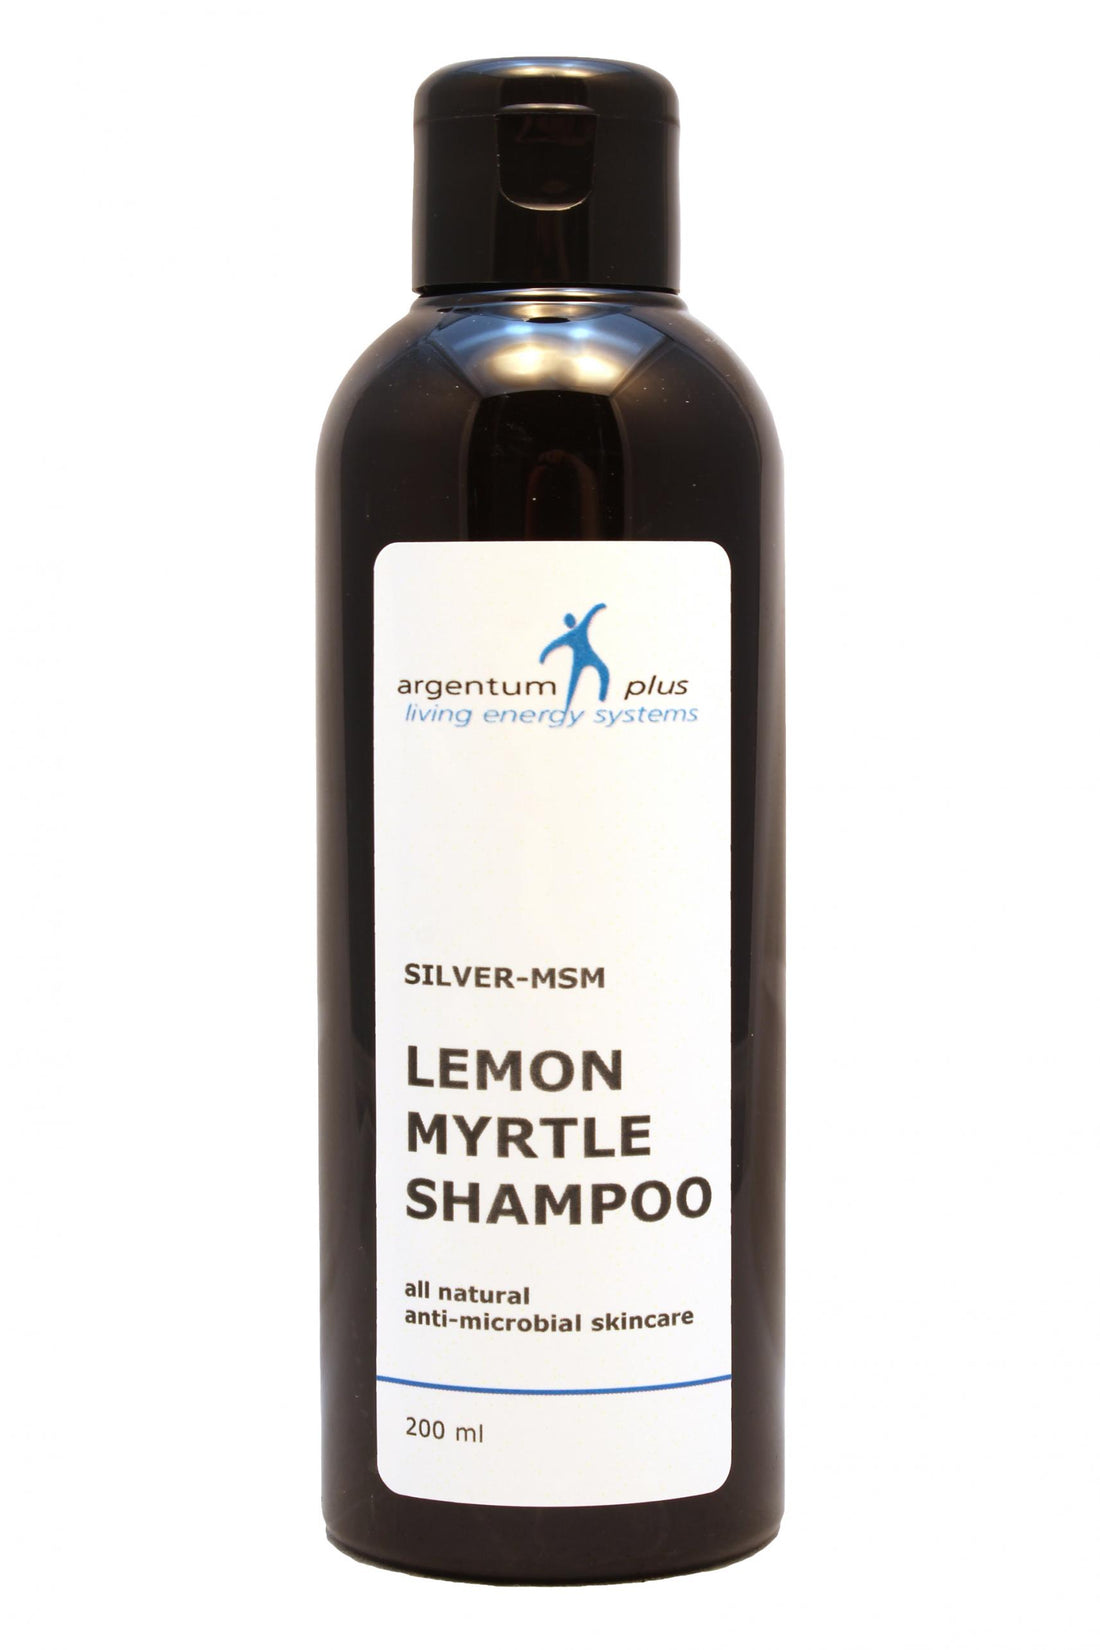 Argentum Plus Silver-MSM Lemon Myrtle Shampoo 200ml